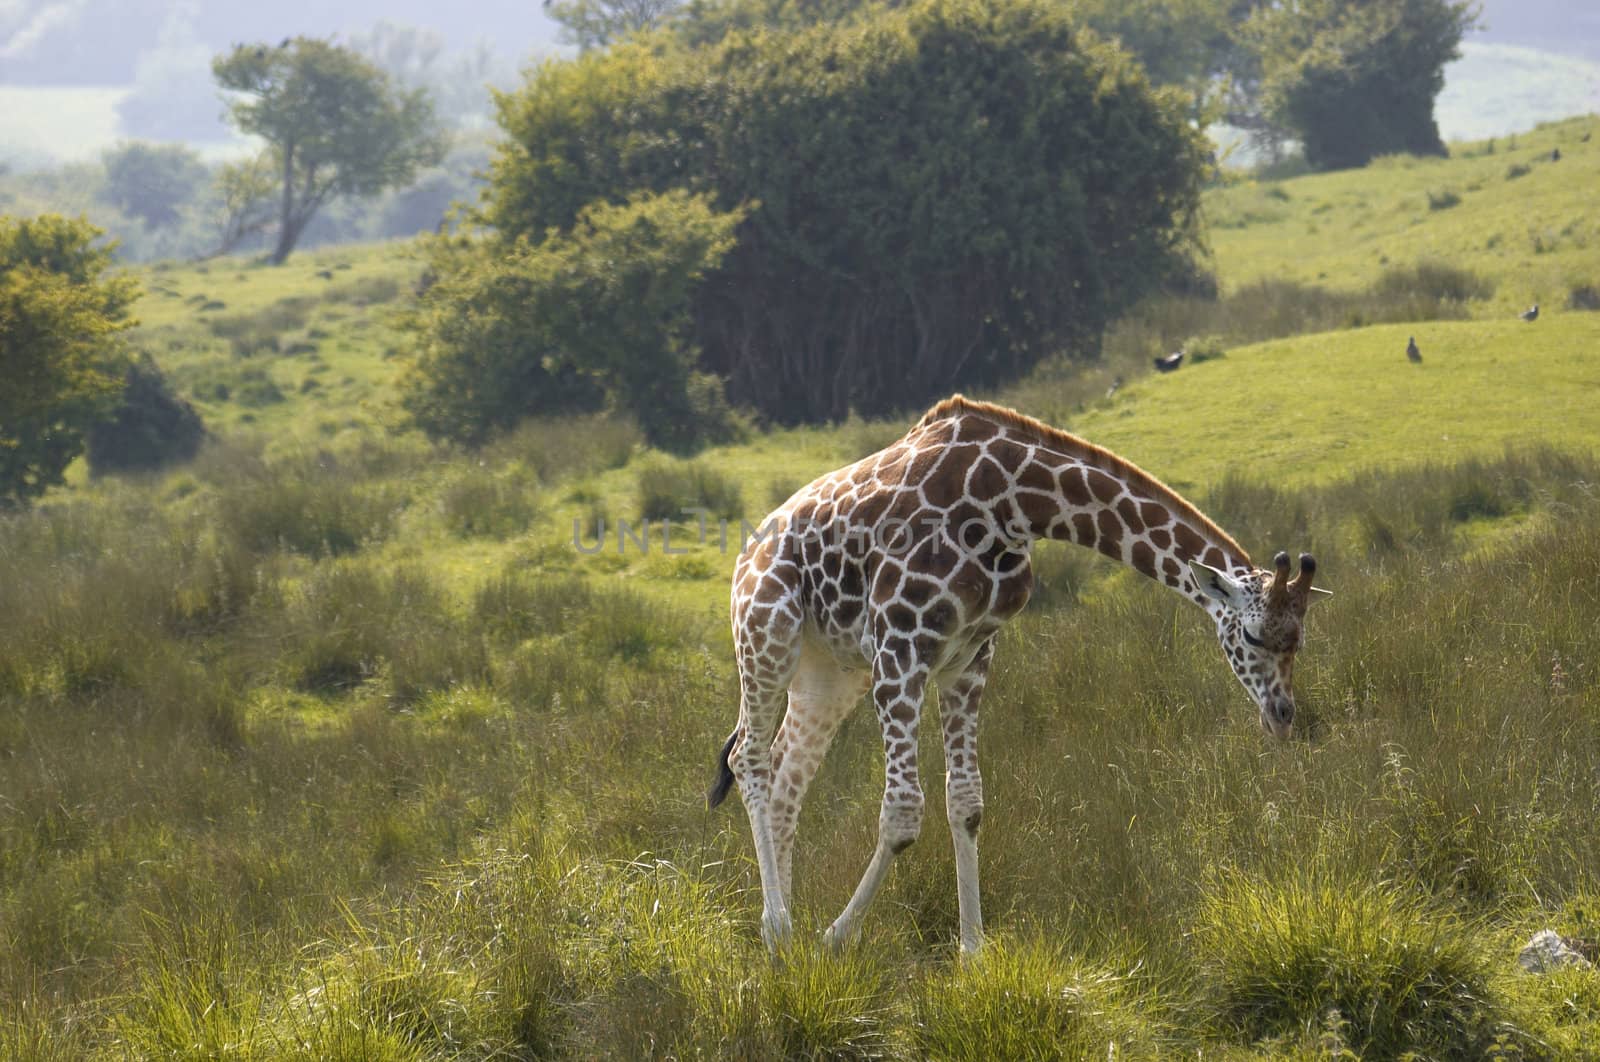 A Giraffe feeding on the grass in wildlife park in England